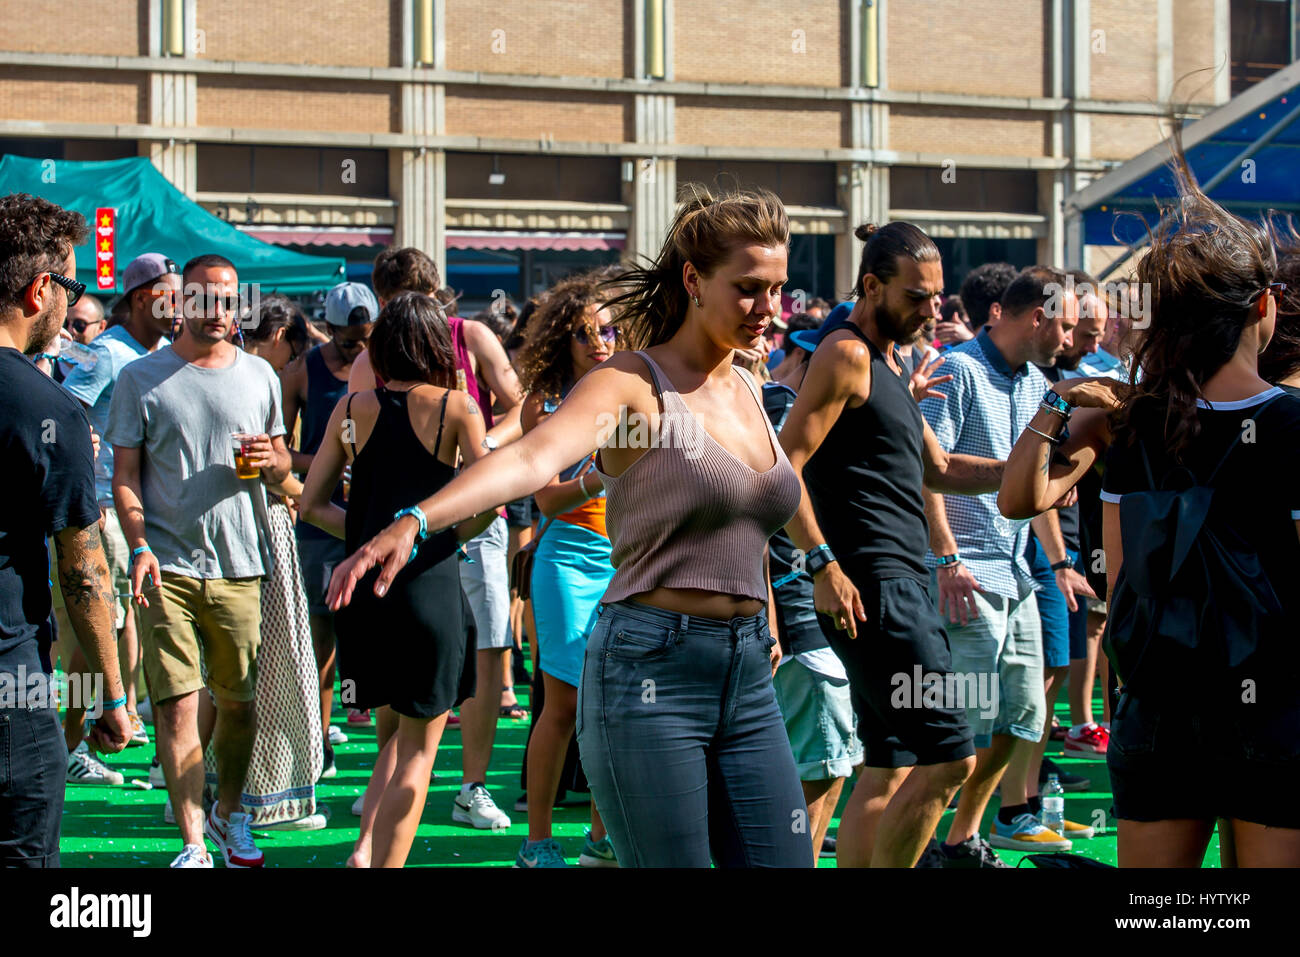 BARCELONA - JUN 16: People dance in a concert at Sonar Festival on June 16, 2016 in Barcelona, Spain. Stock Photo